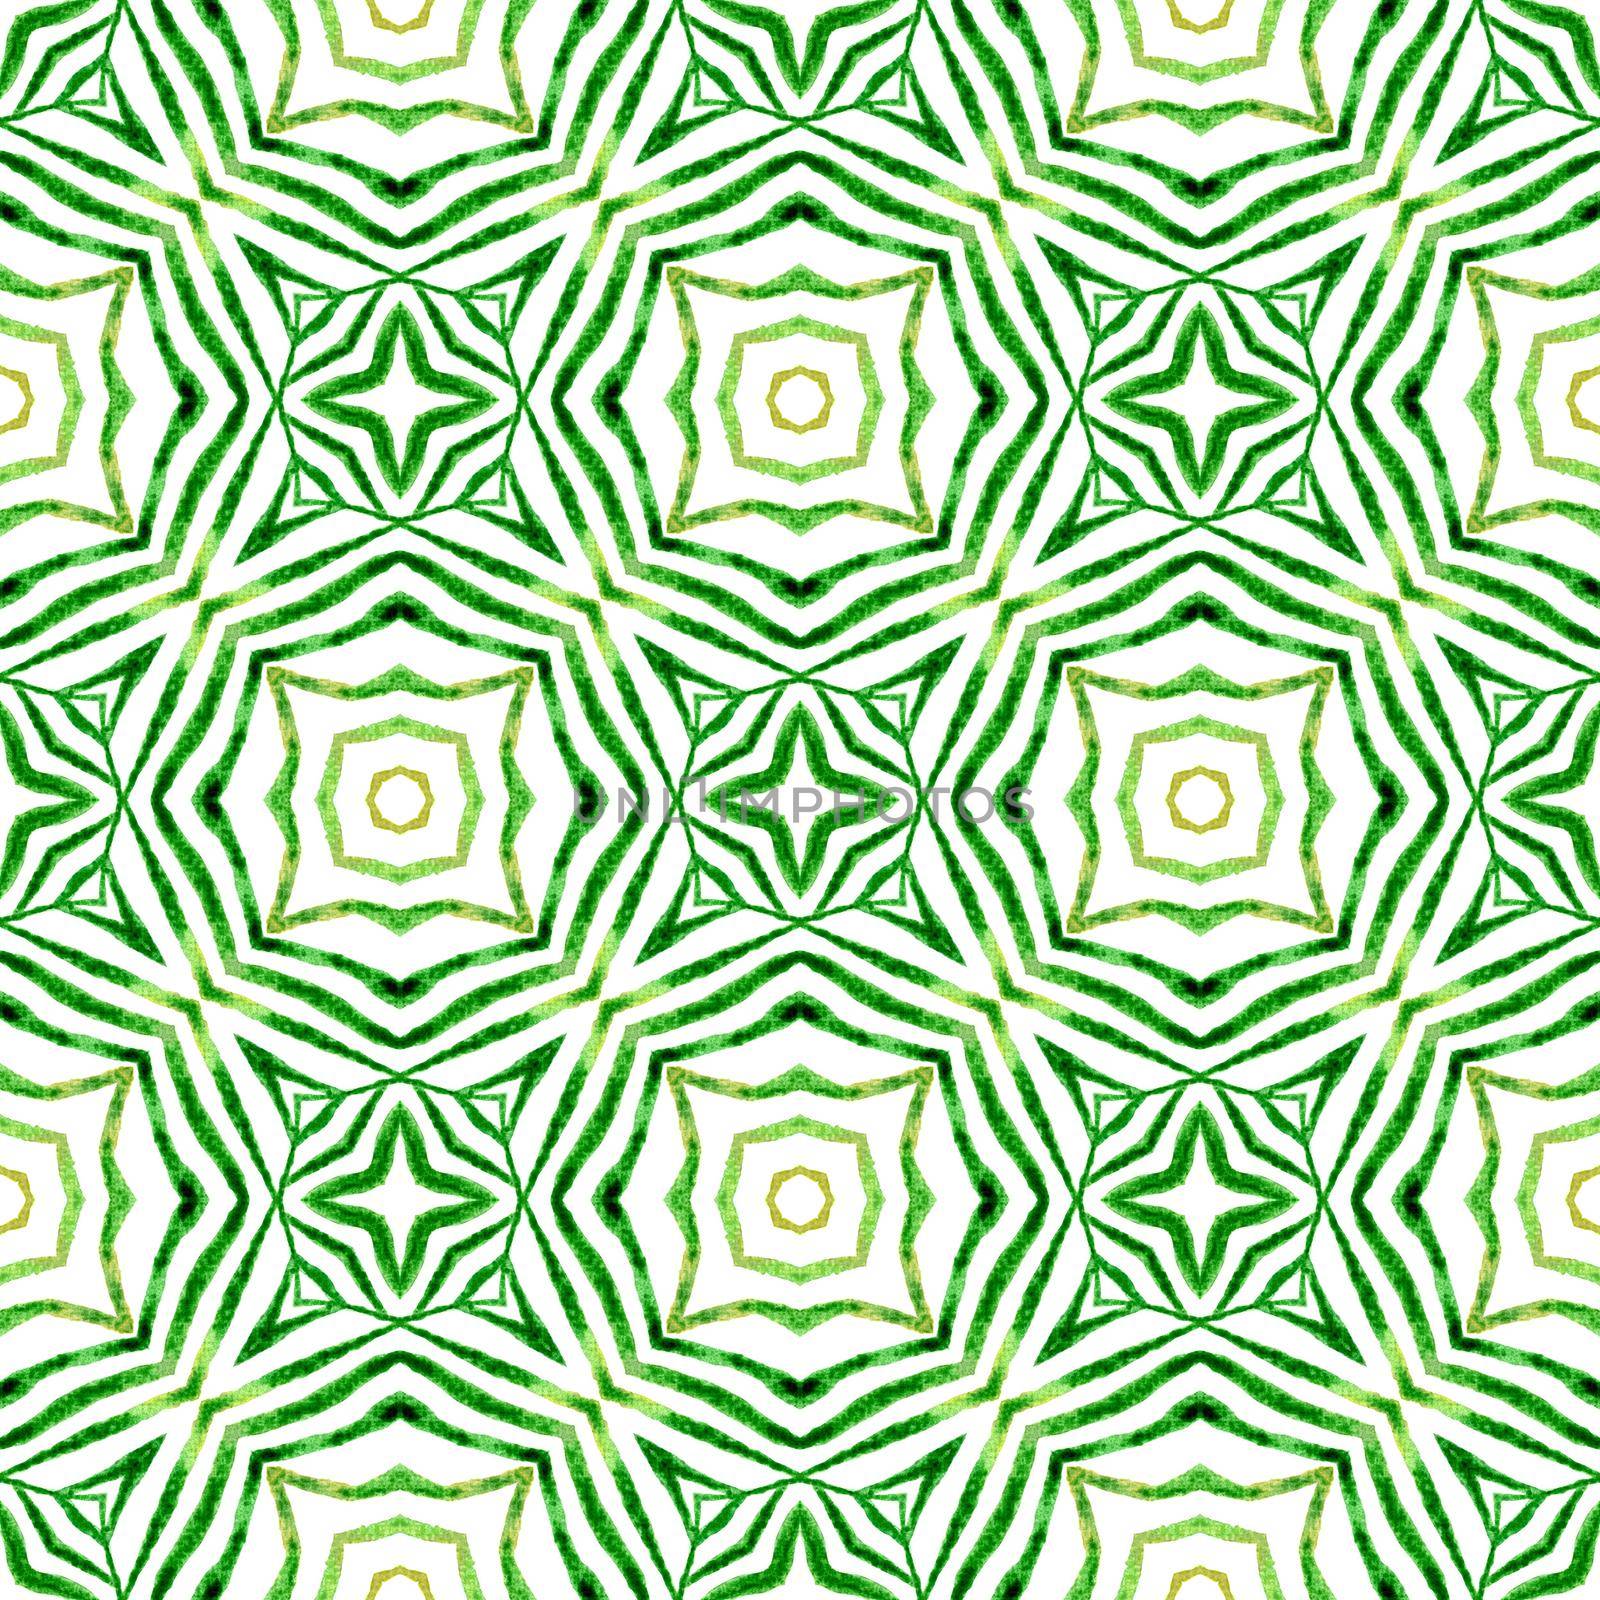 Striped hand drawn design. Green positive boho chic summer design. Repeating striped hand drawn border. Textile ready Actual print, swimwear fabric, wallpaper, wrapping.